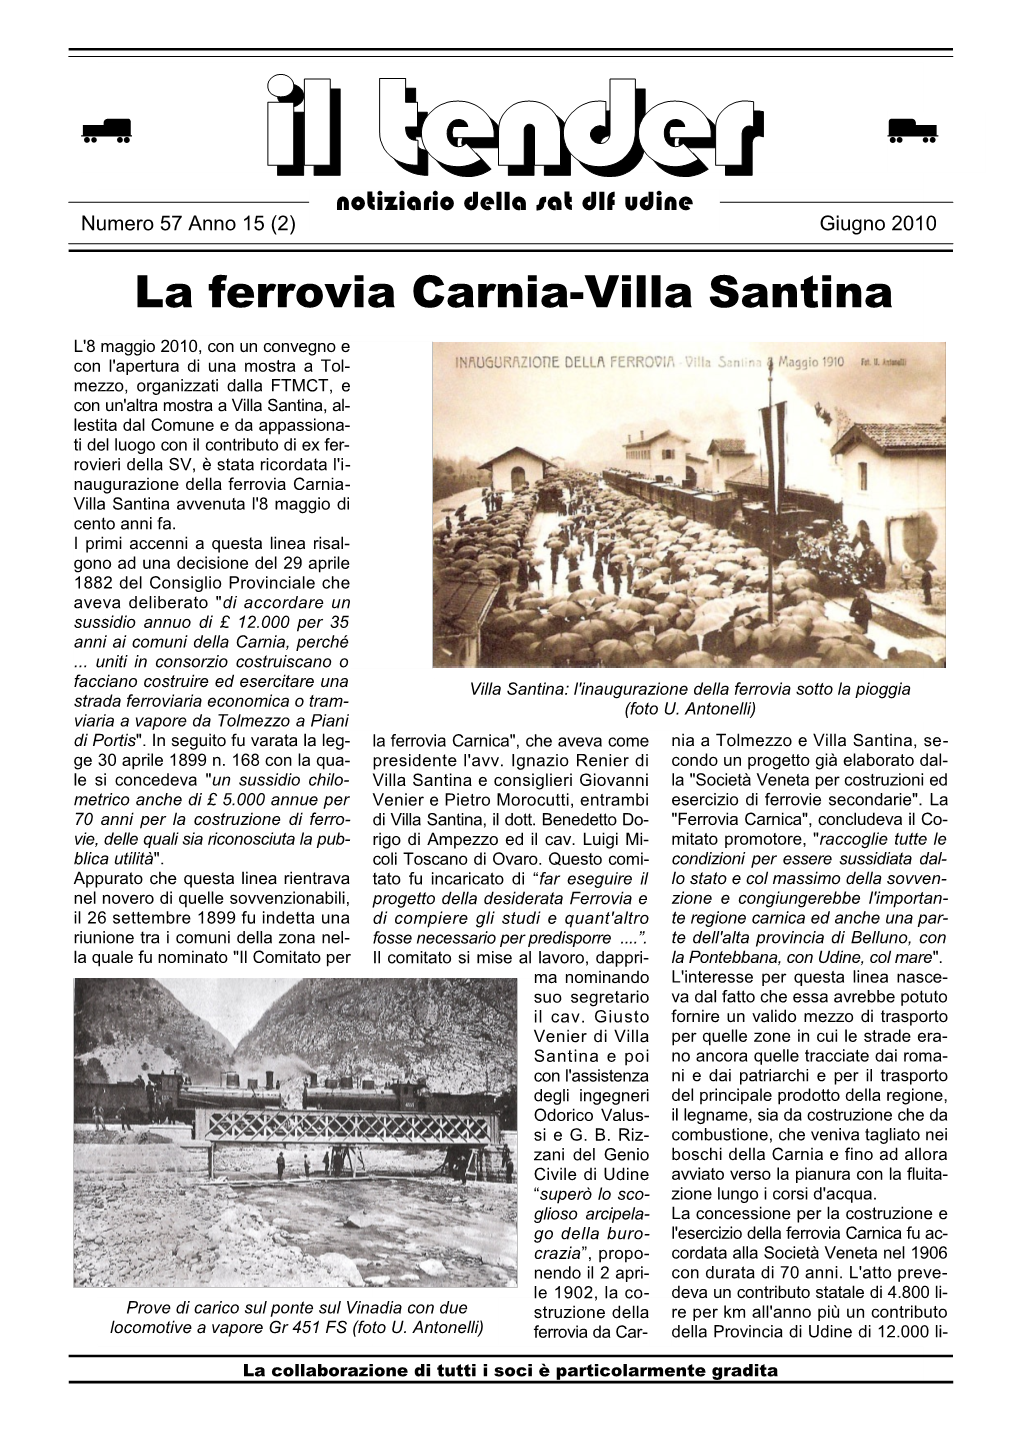 La Ferrovia Carnia-Villa Santina